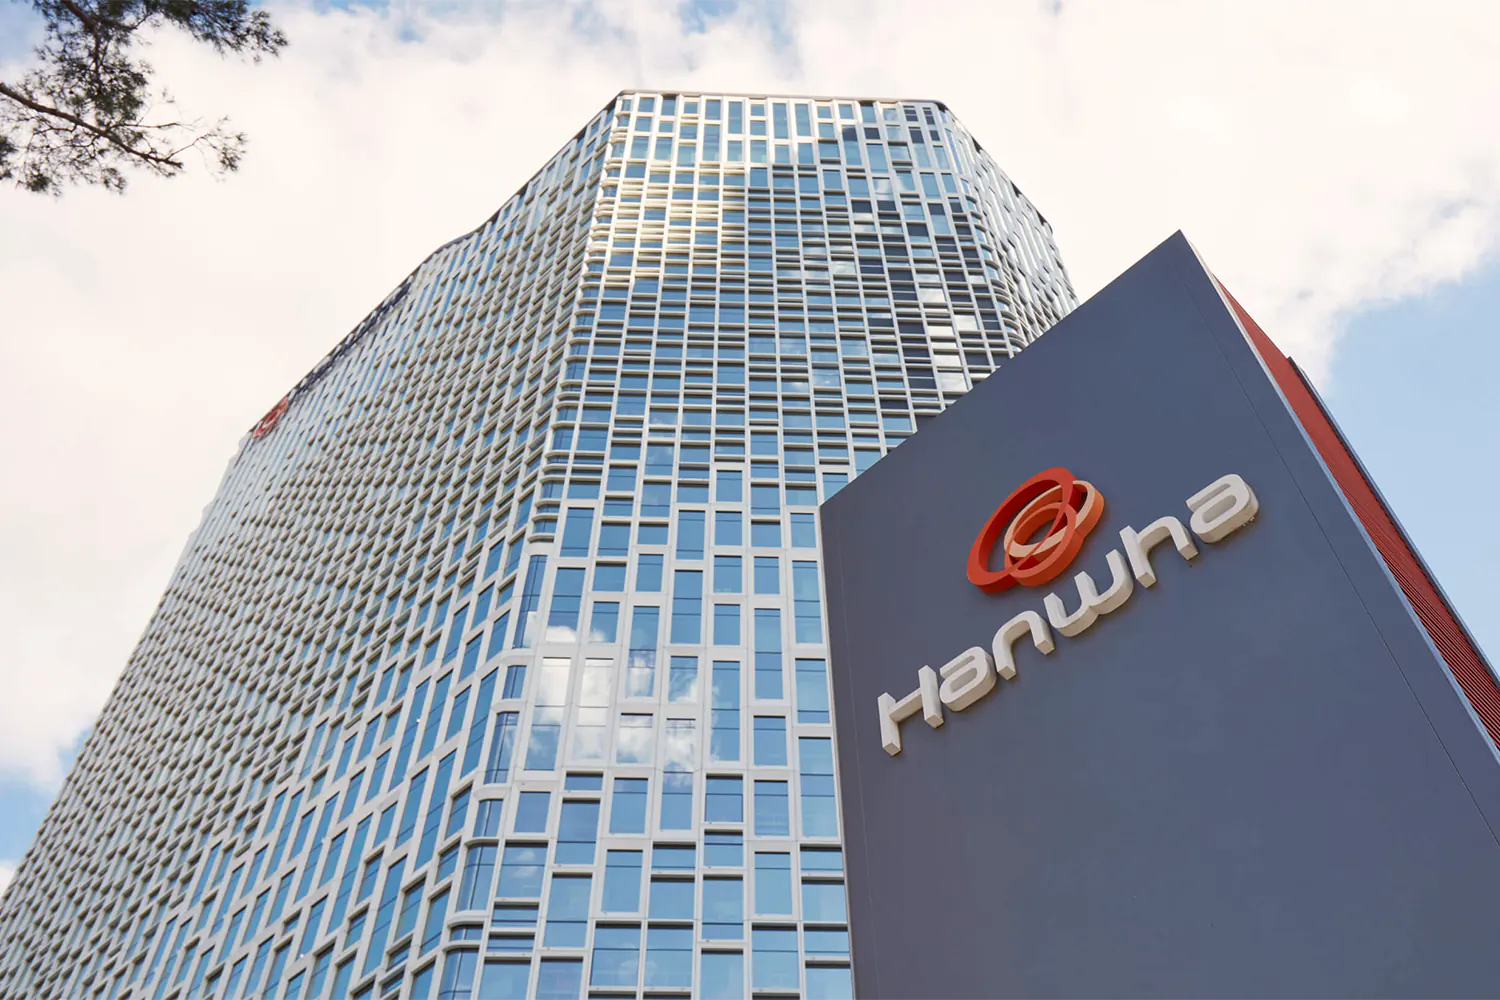 Hanwha's corporate headquarters located in Korea. A large skyscraper office building.